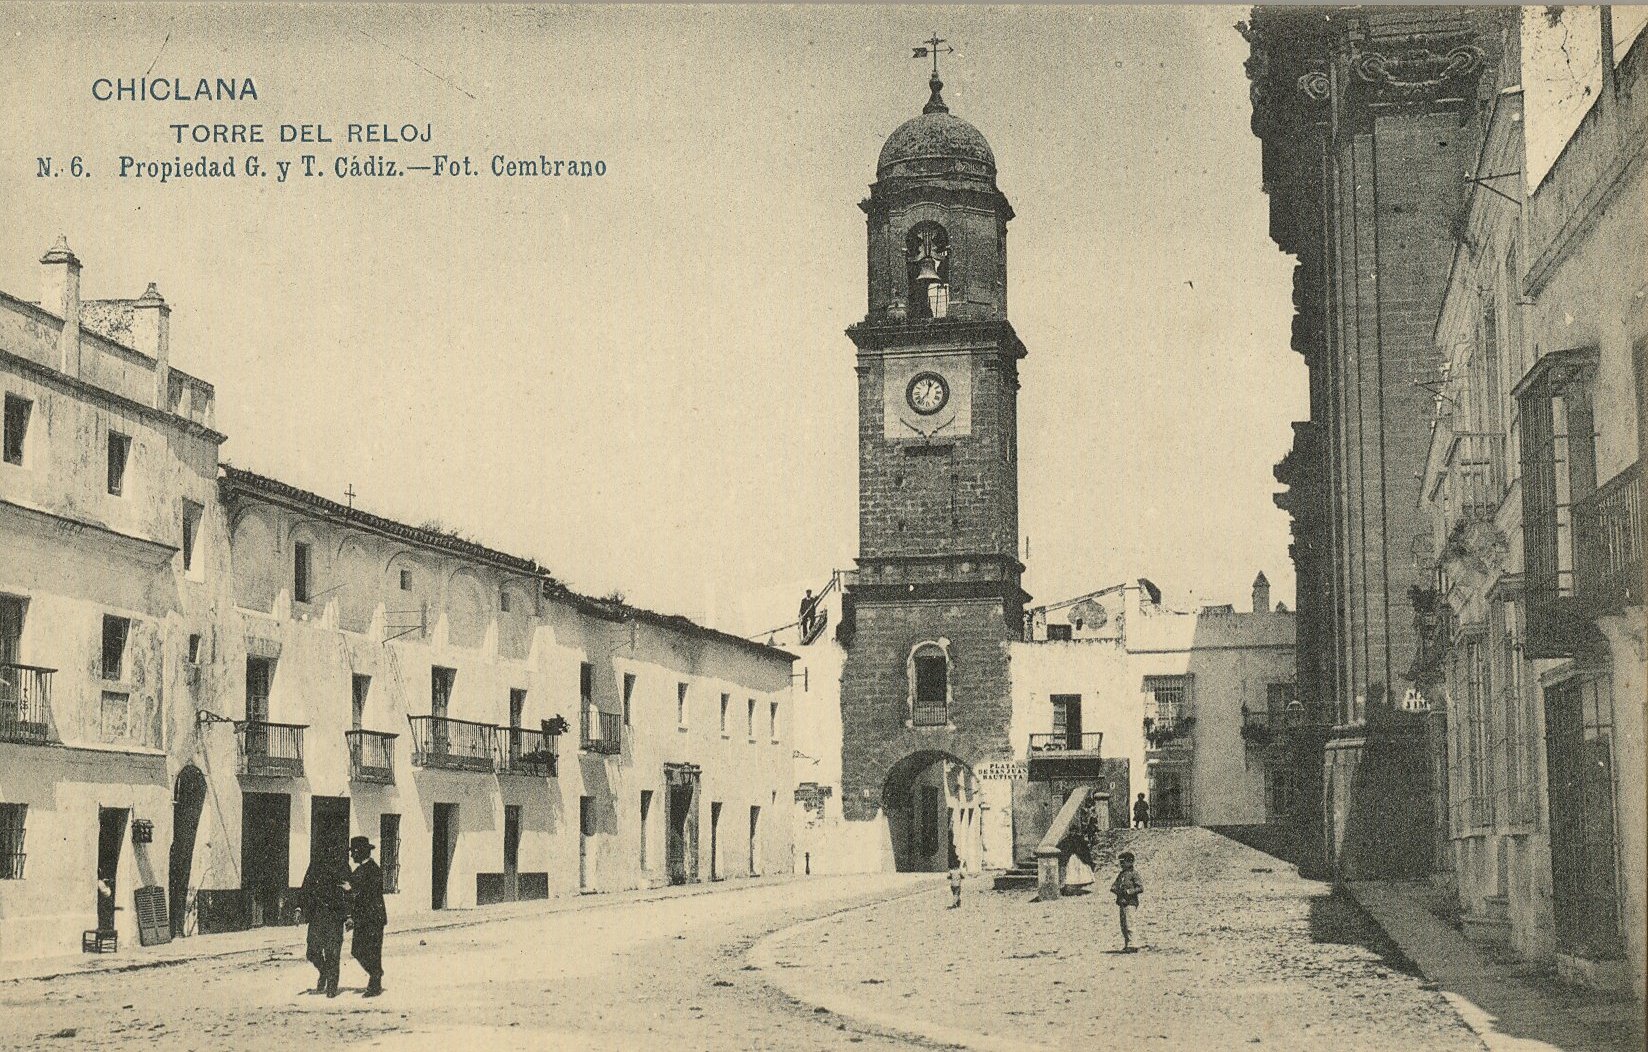 CHICLANA: Torre del reloj. 1903 (DJ07602)